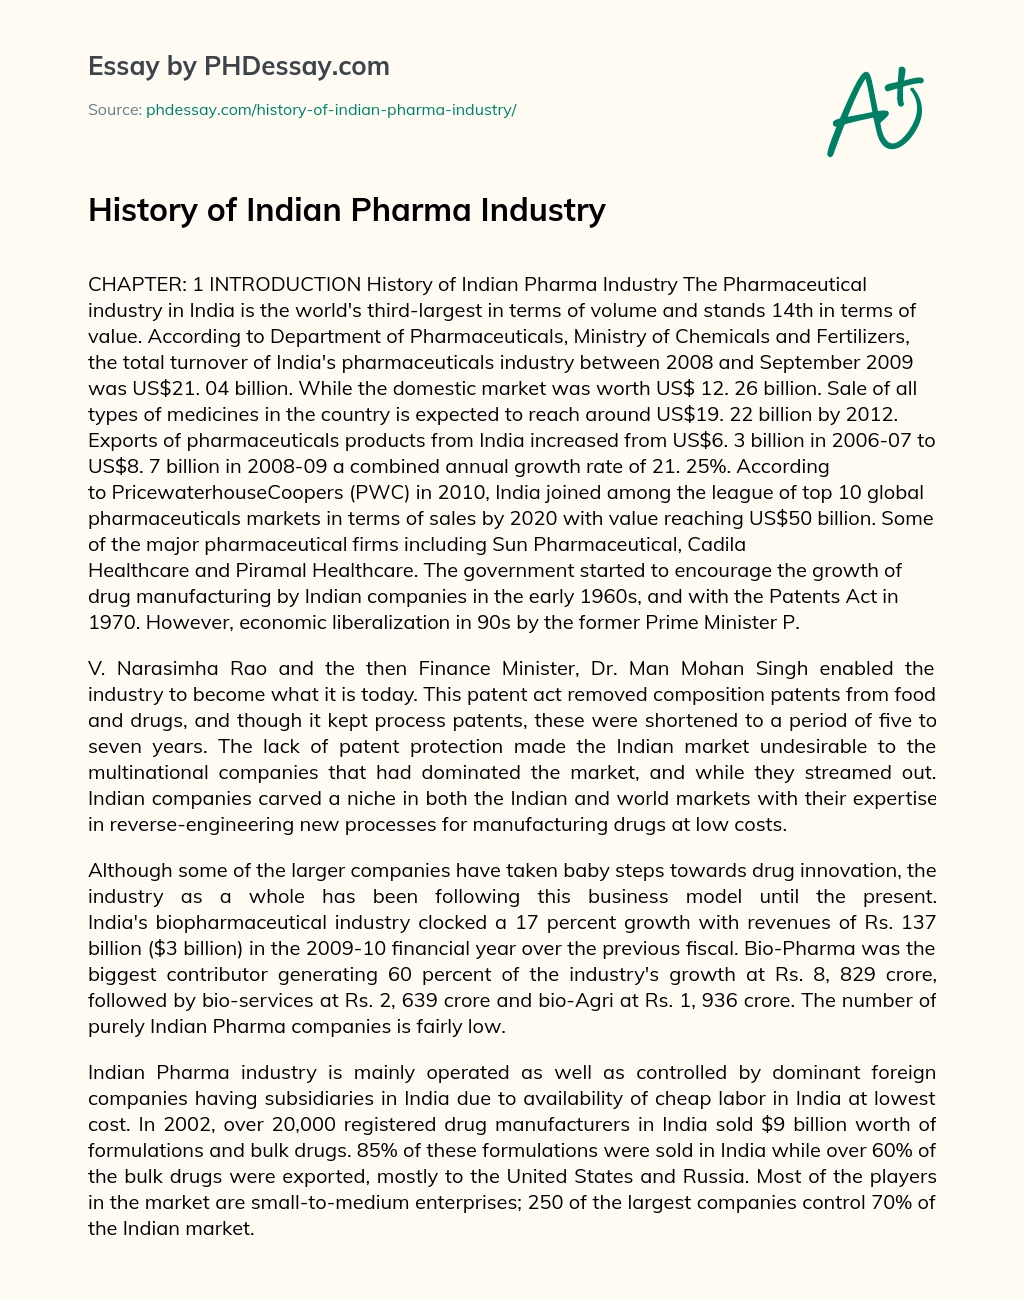 History of Indian Pharma Industry essay